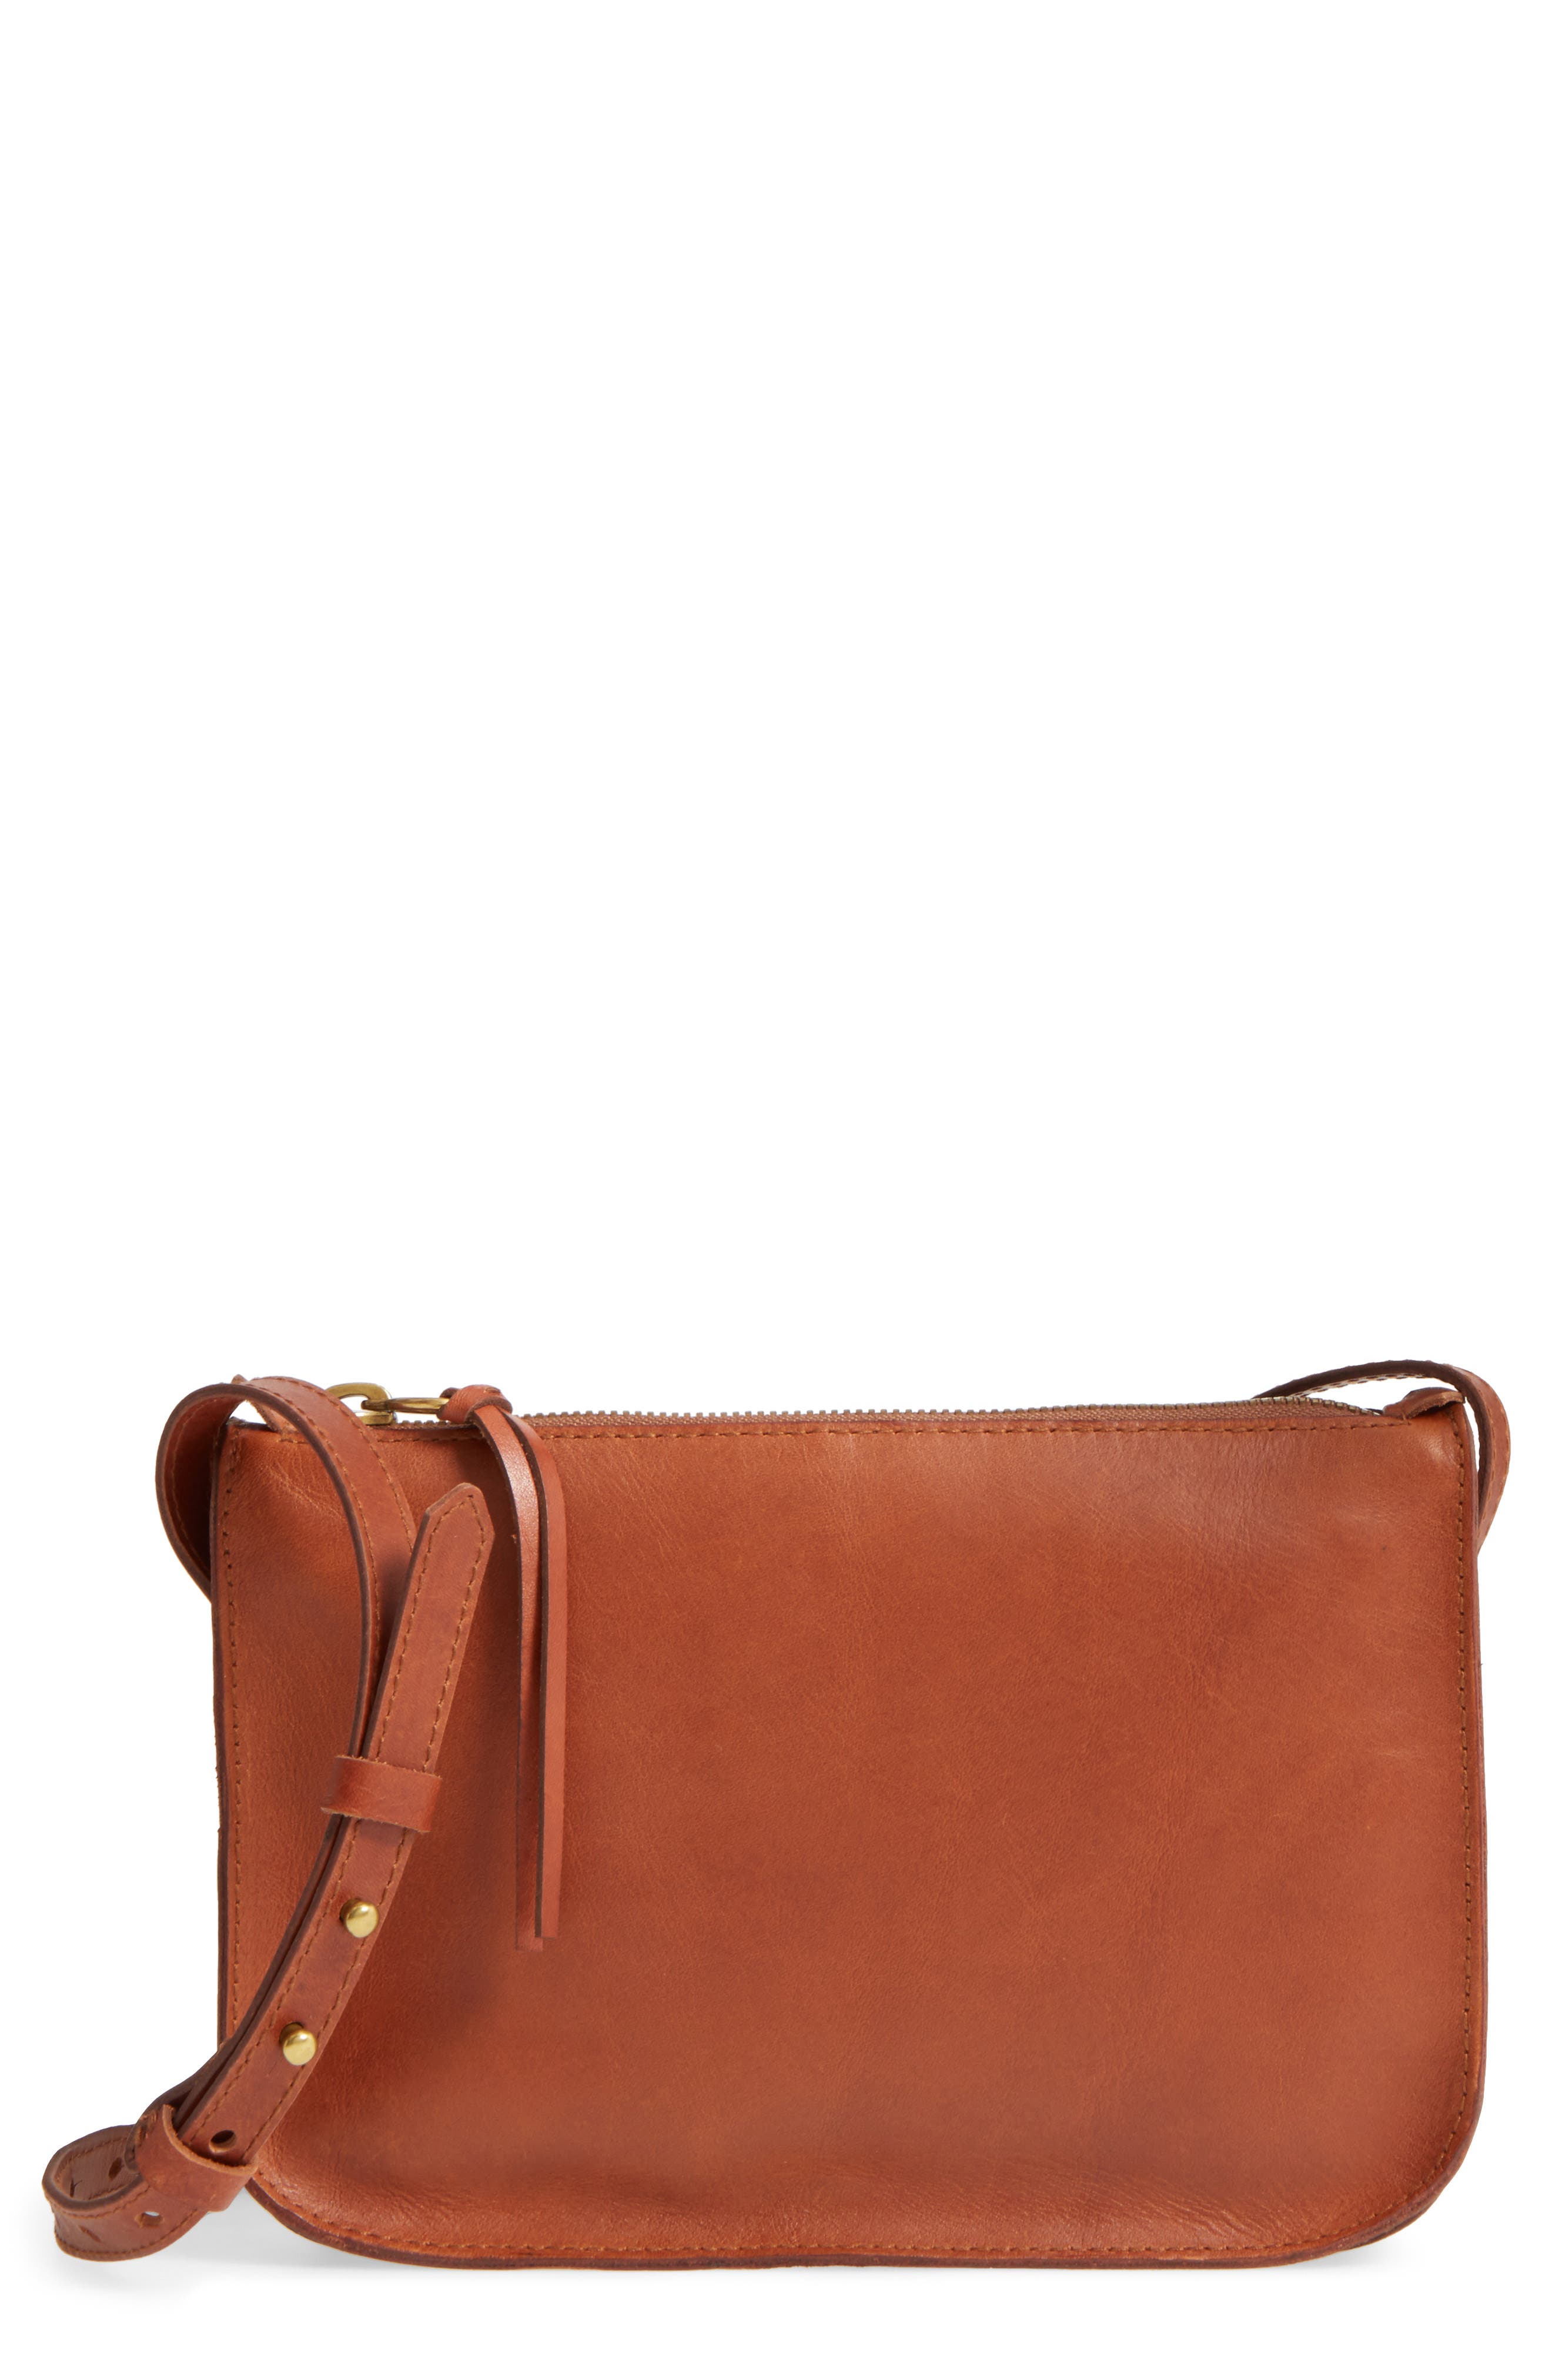 tweed shoulder bag Bags & Purses Handbags Crossbody Bags genuine leather bag Cream leather crossbody bag 